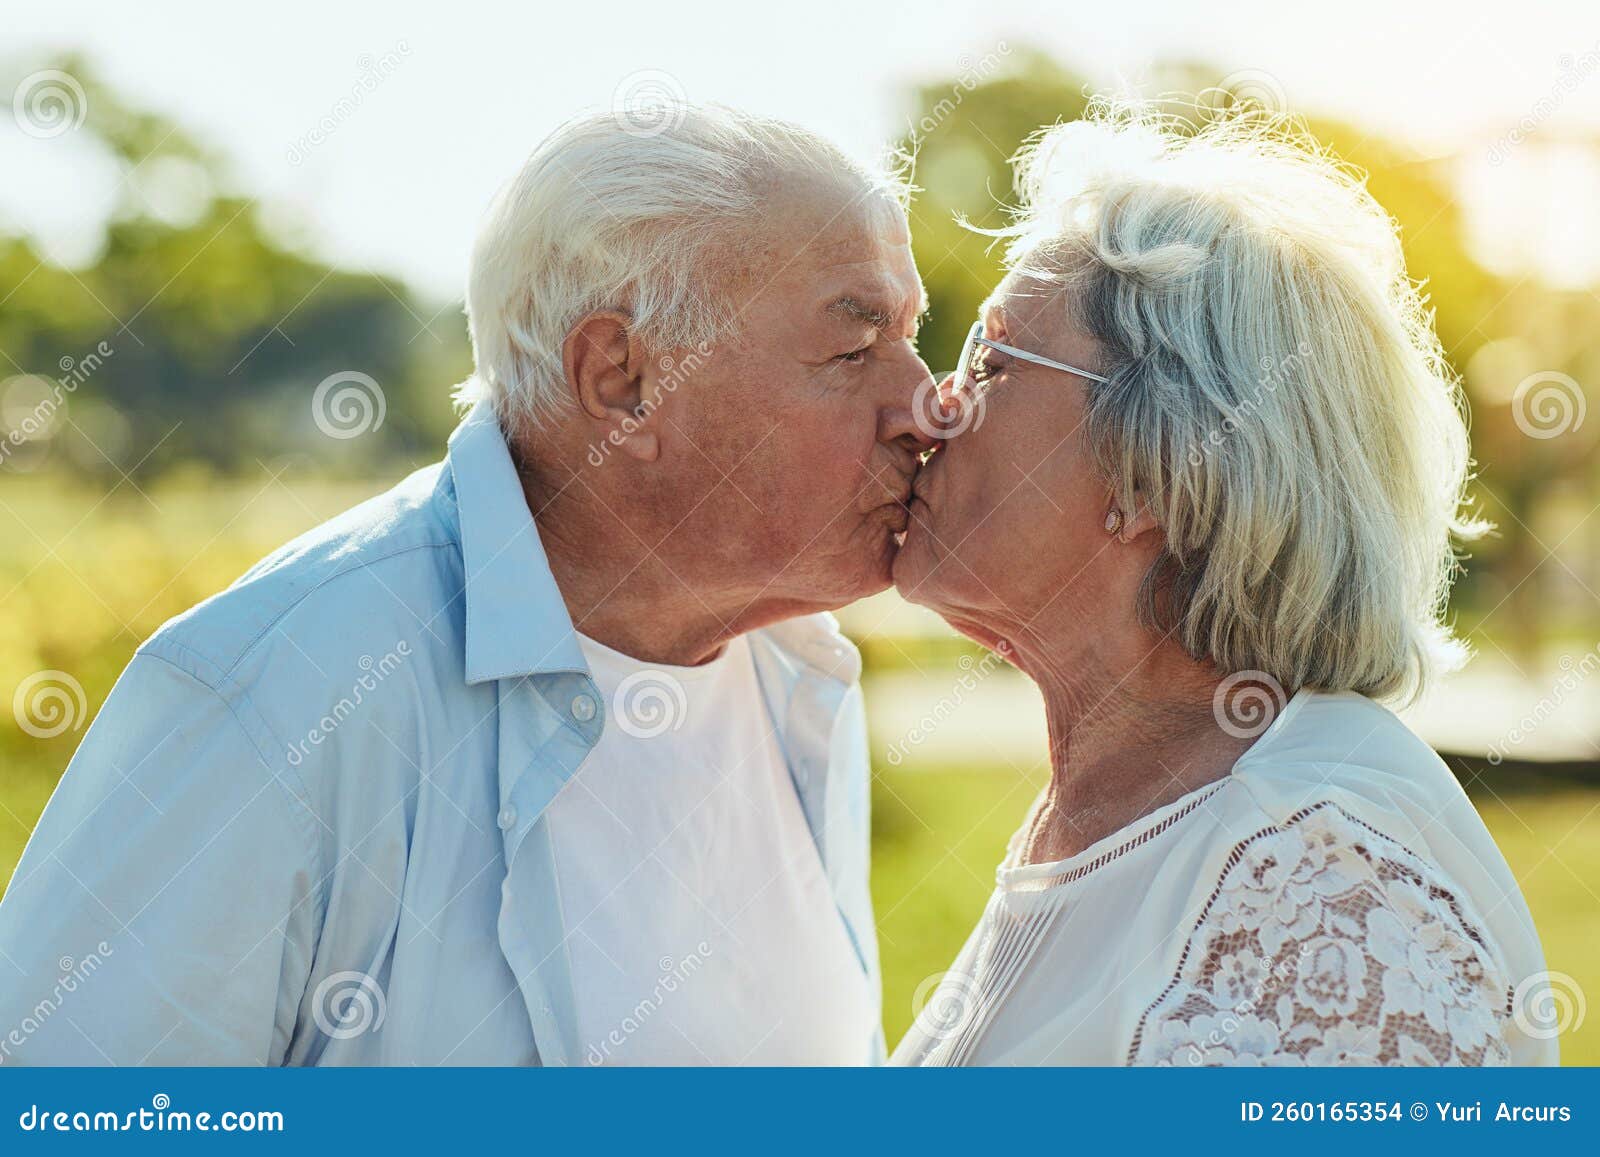 Kissing Man Older Outside Woman Stock Photos